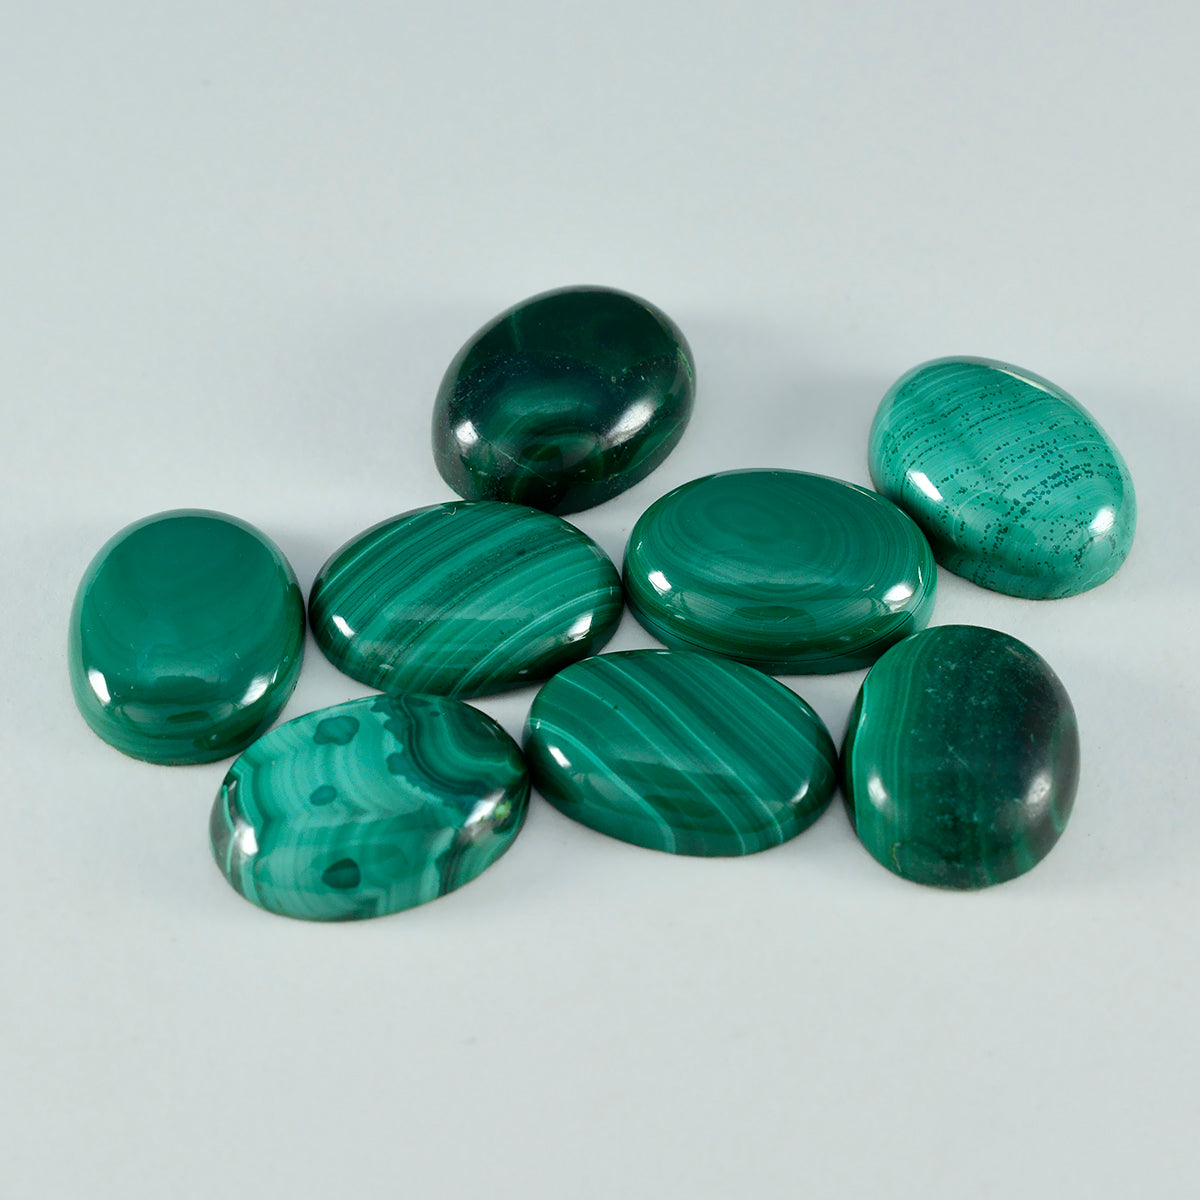 Riyogems 1PC groene malachiet cabochon 10x12 mm ovale vorm A kwaliteit losse steen